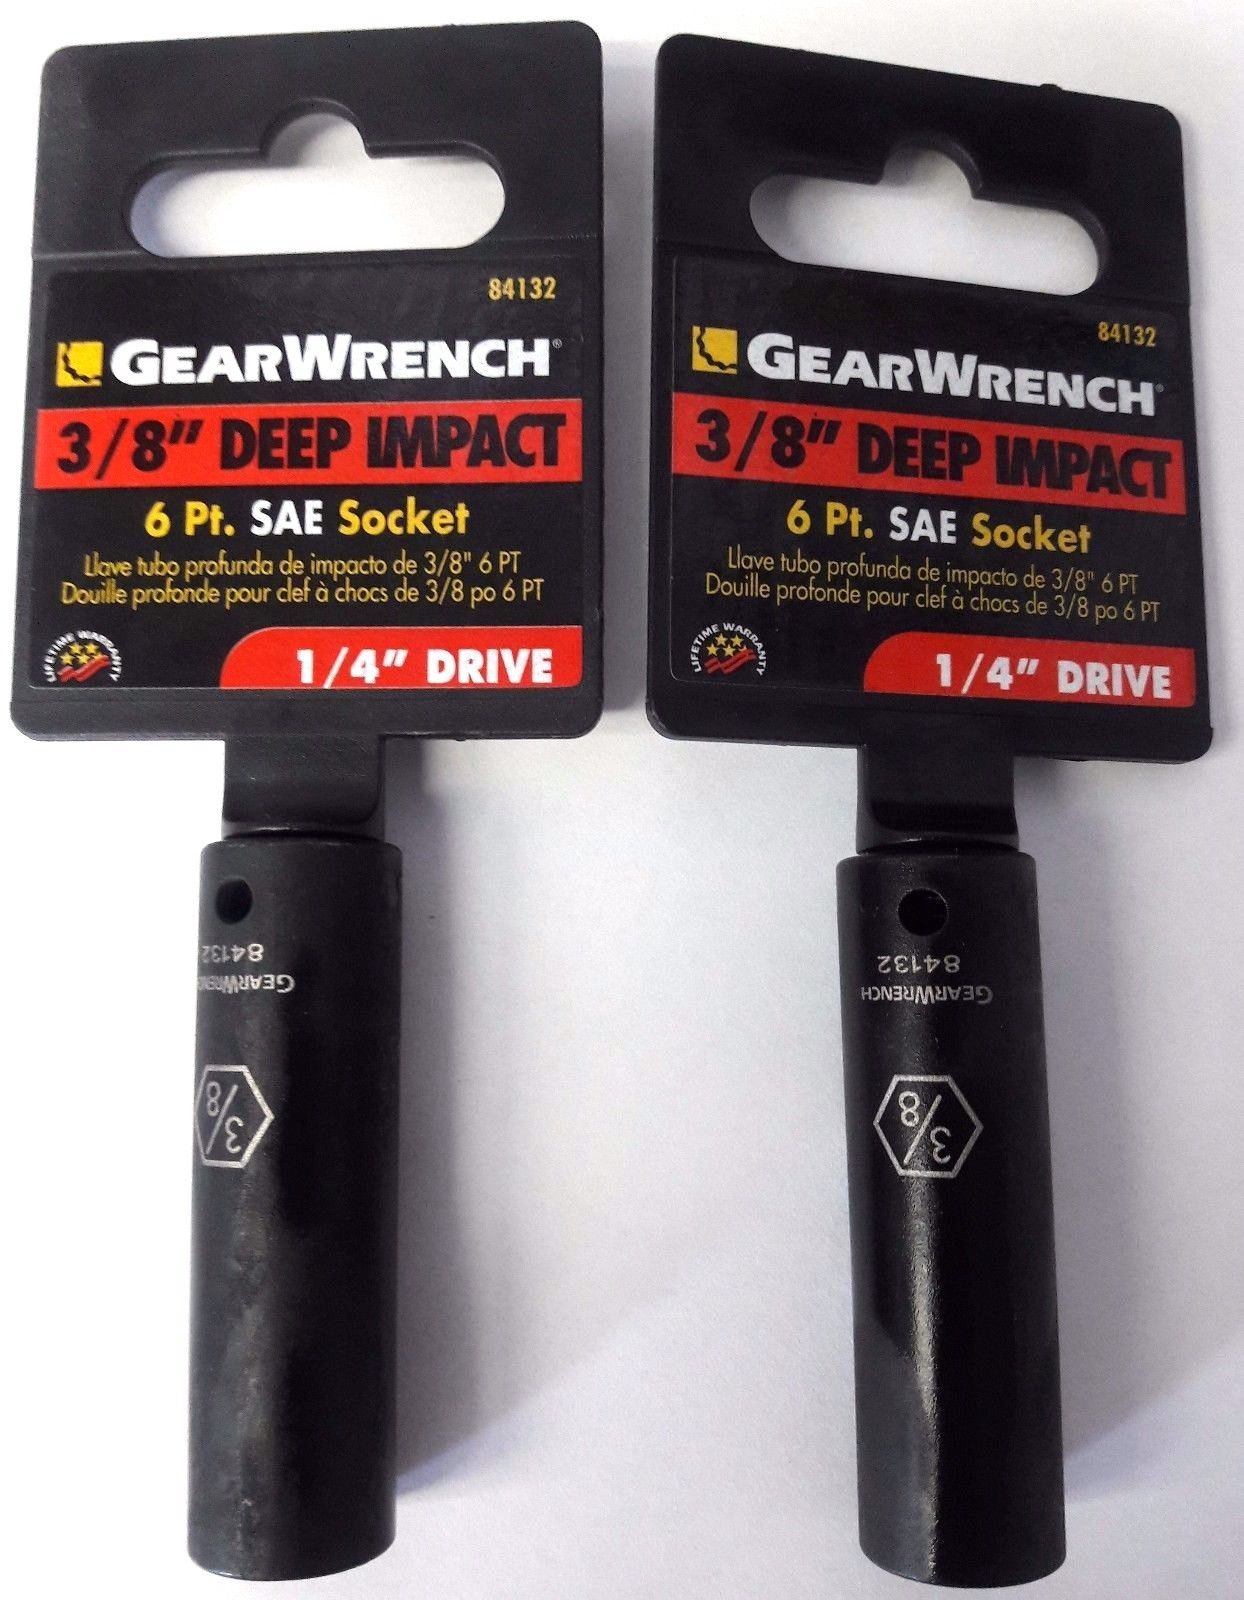 Gearwrench 84132 1/4" Drive 3/8" Deep Impact Socket 6pt 2PCS